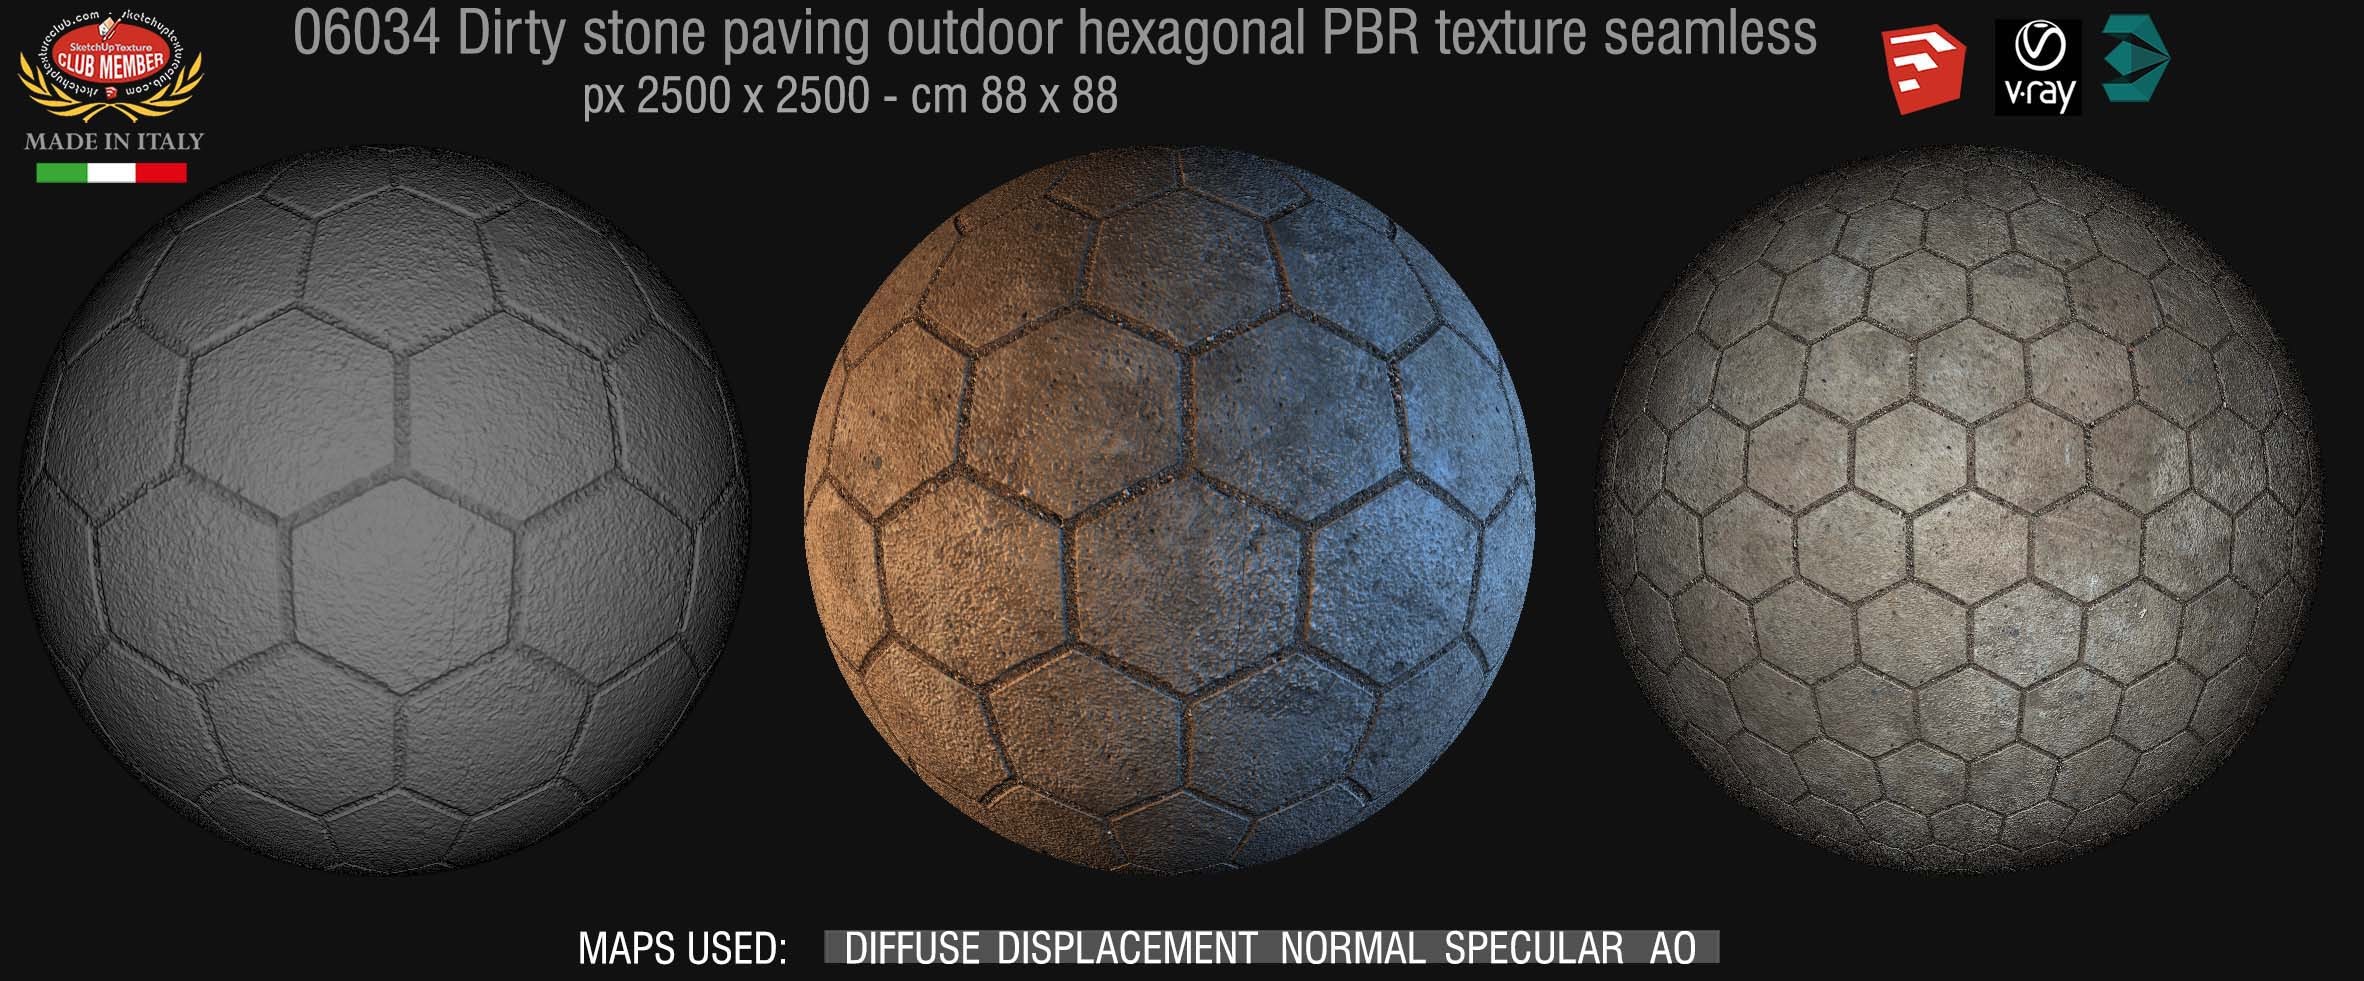 Dirty stone paving outdoor hexagonal texture seamless 06034